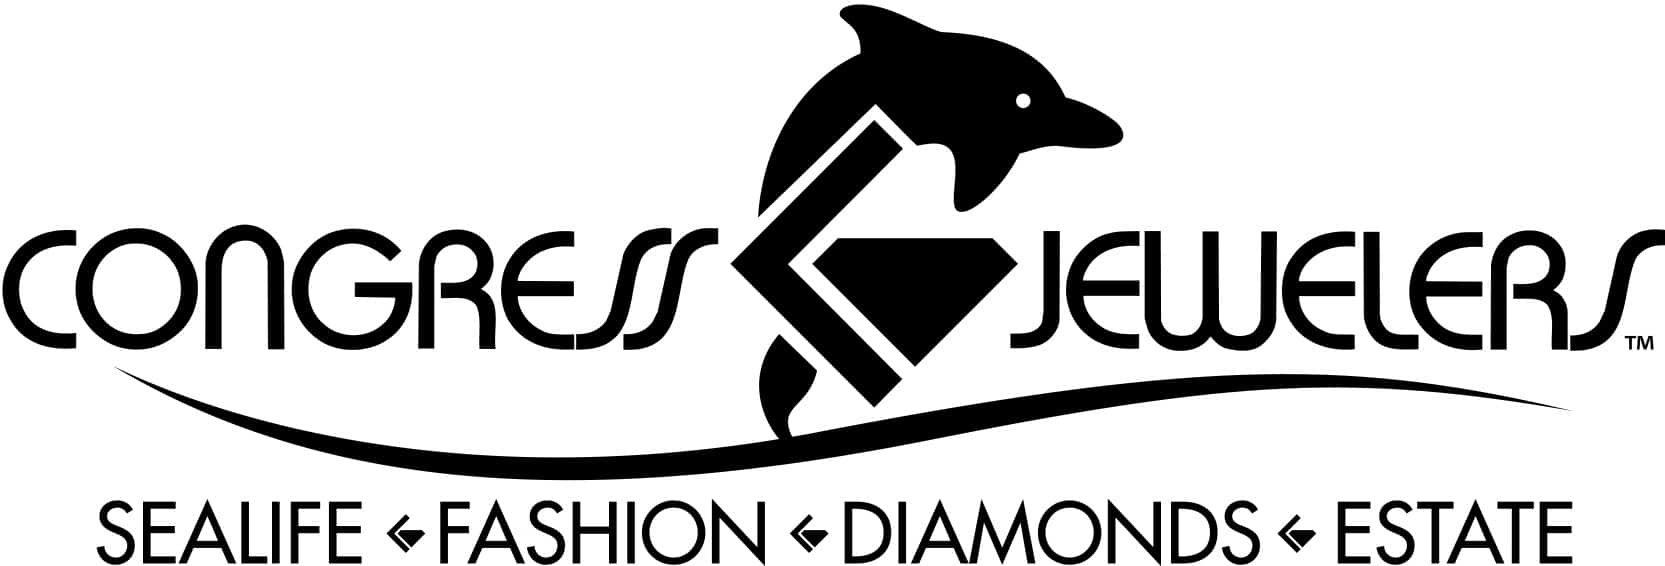 congress jewelers logo